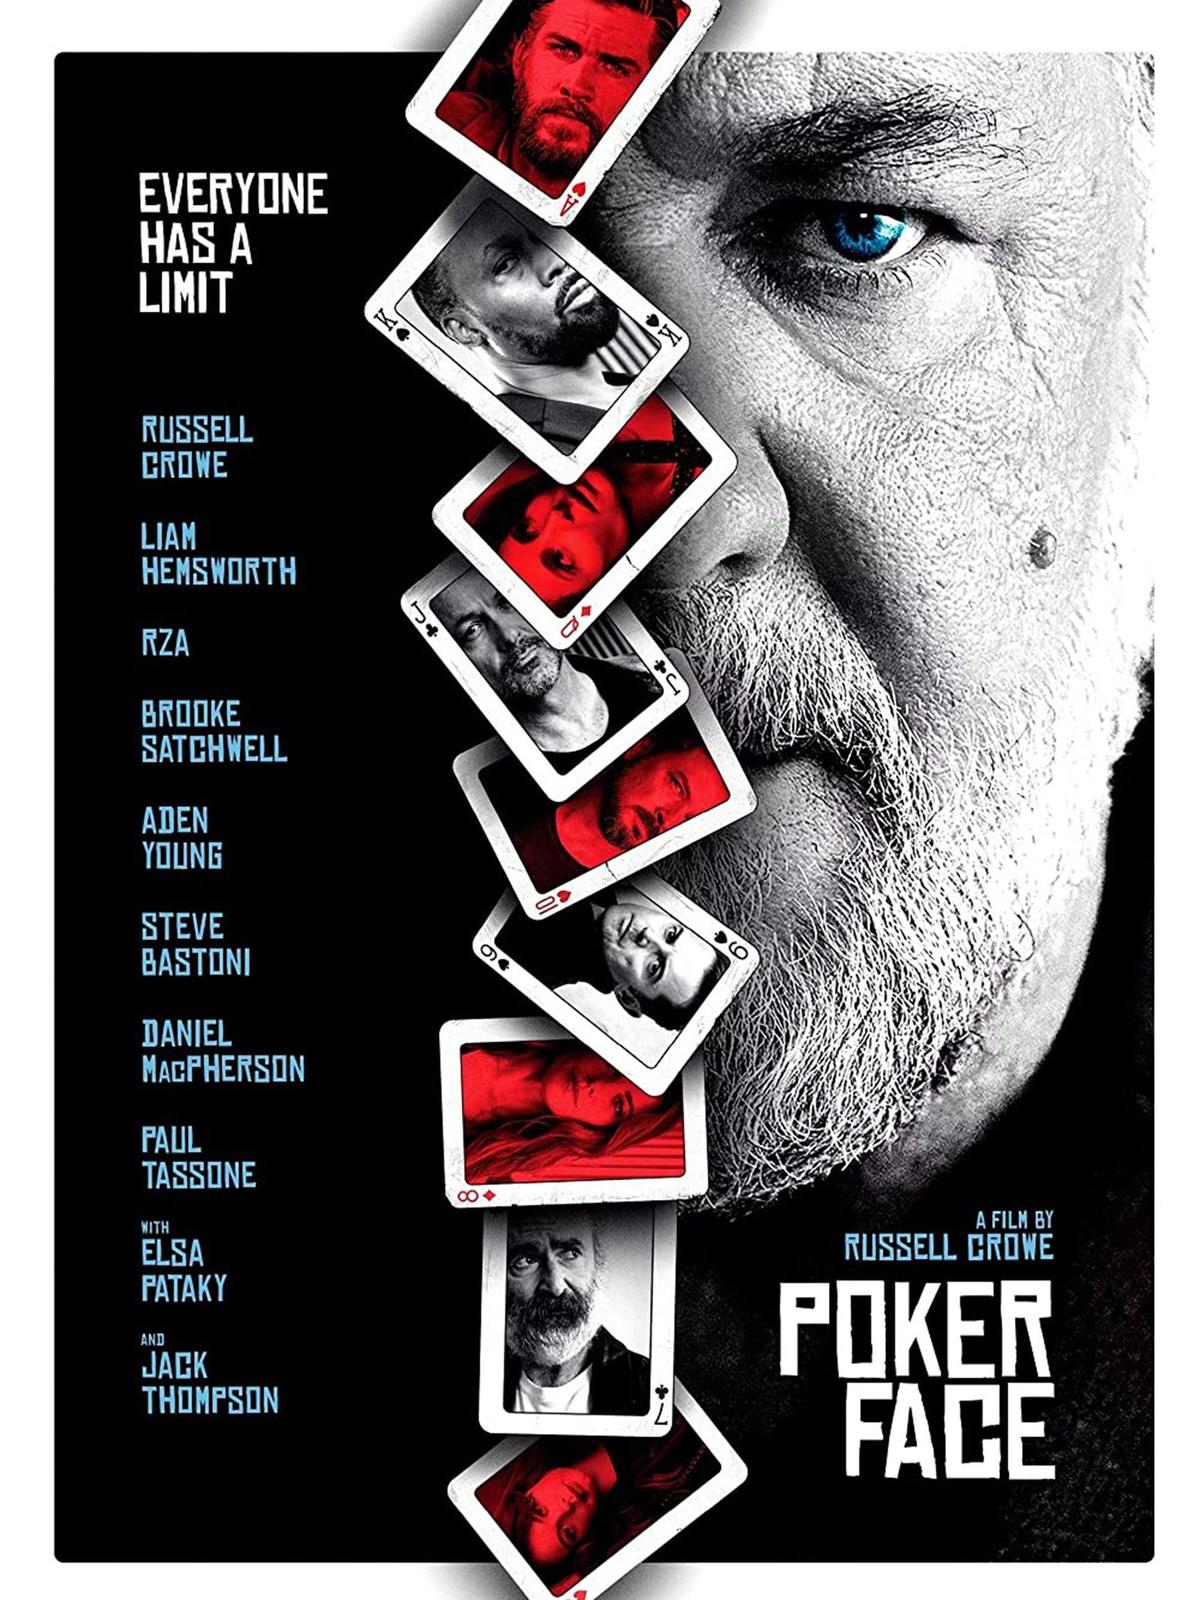 Movie poster for "Poker Face."